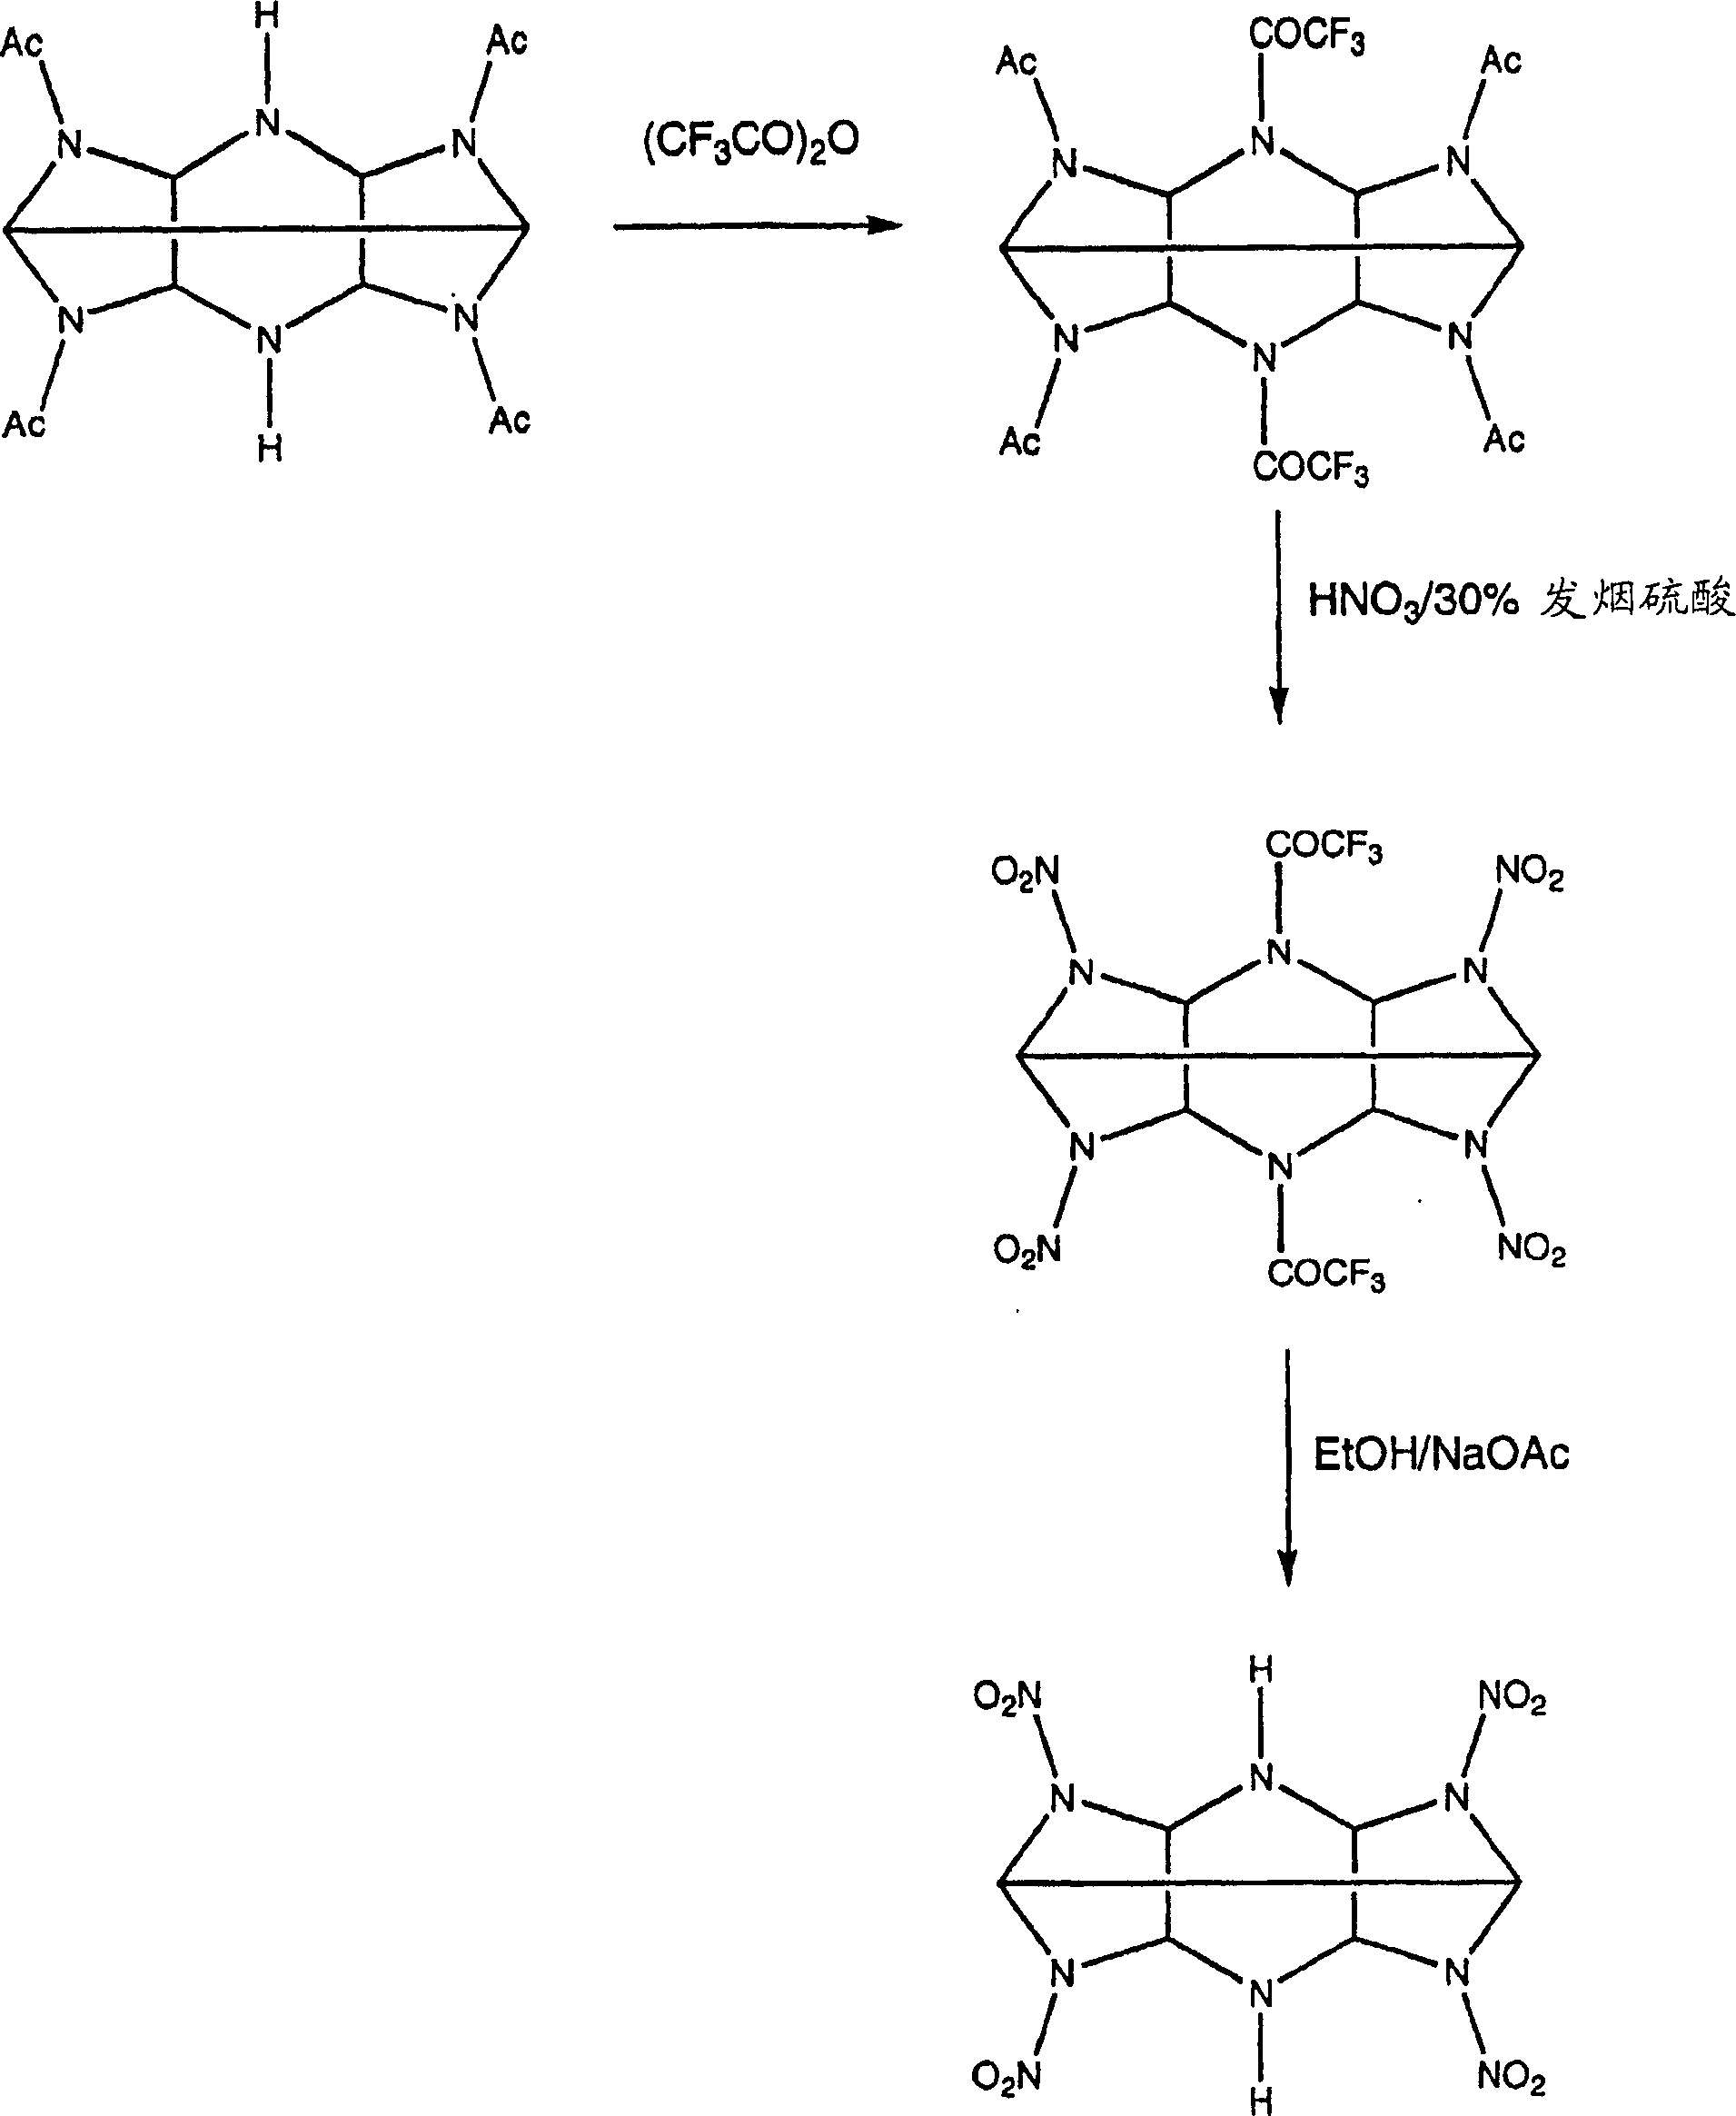 Mono amine and diamine derivatives of cl-20